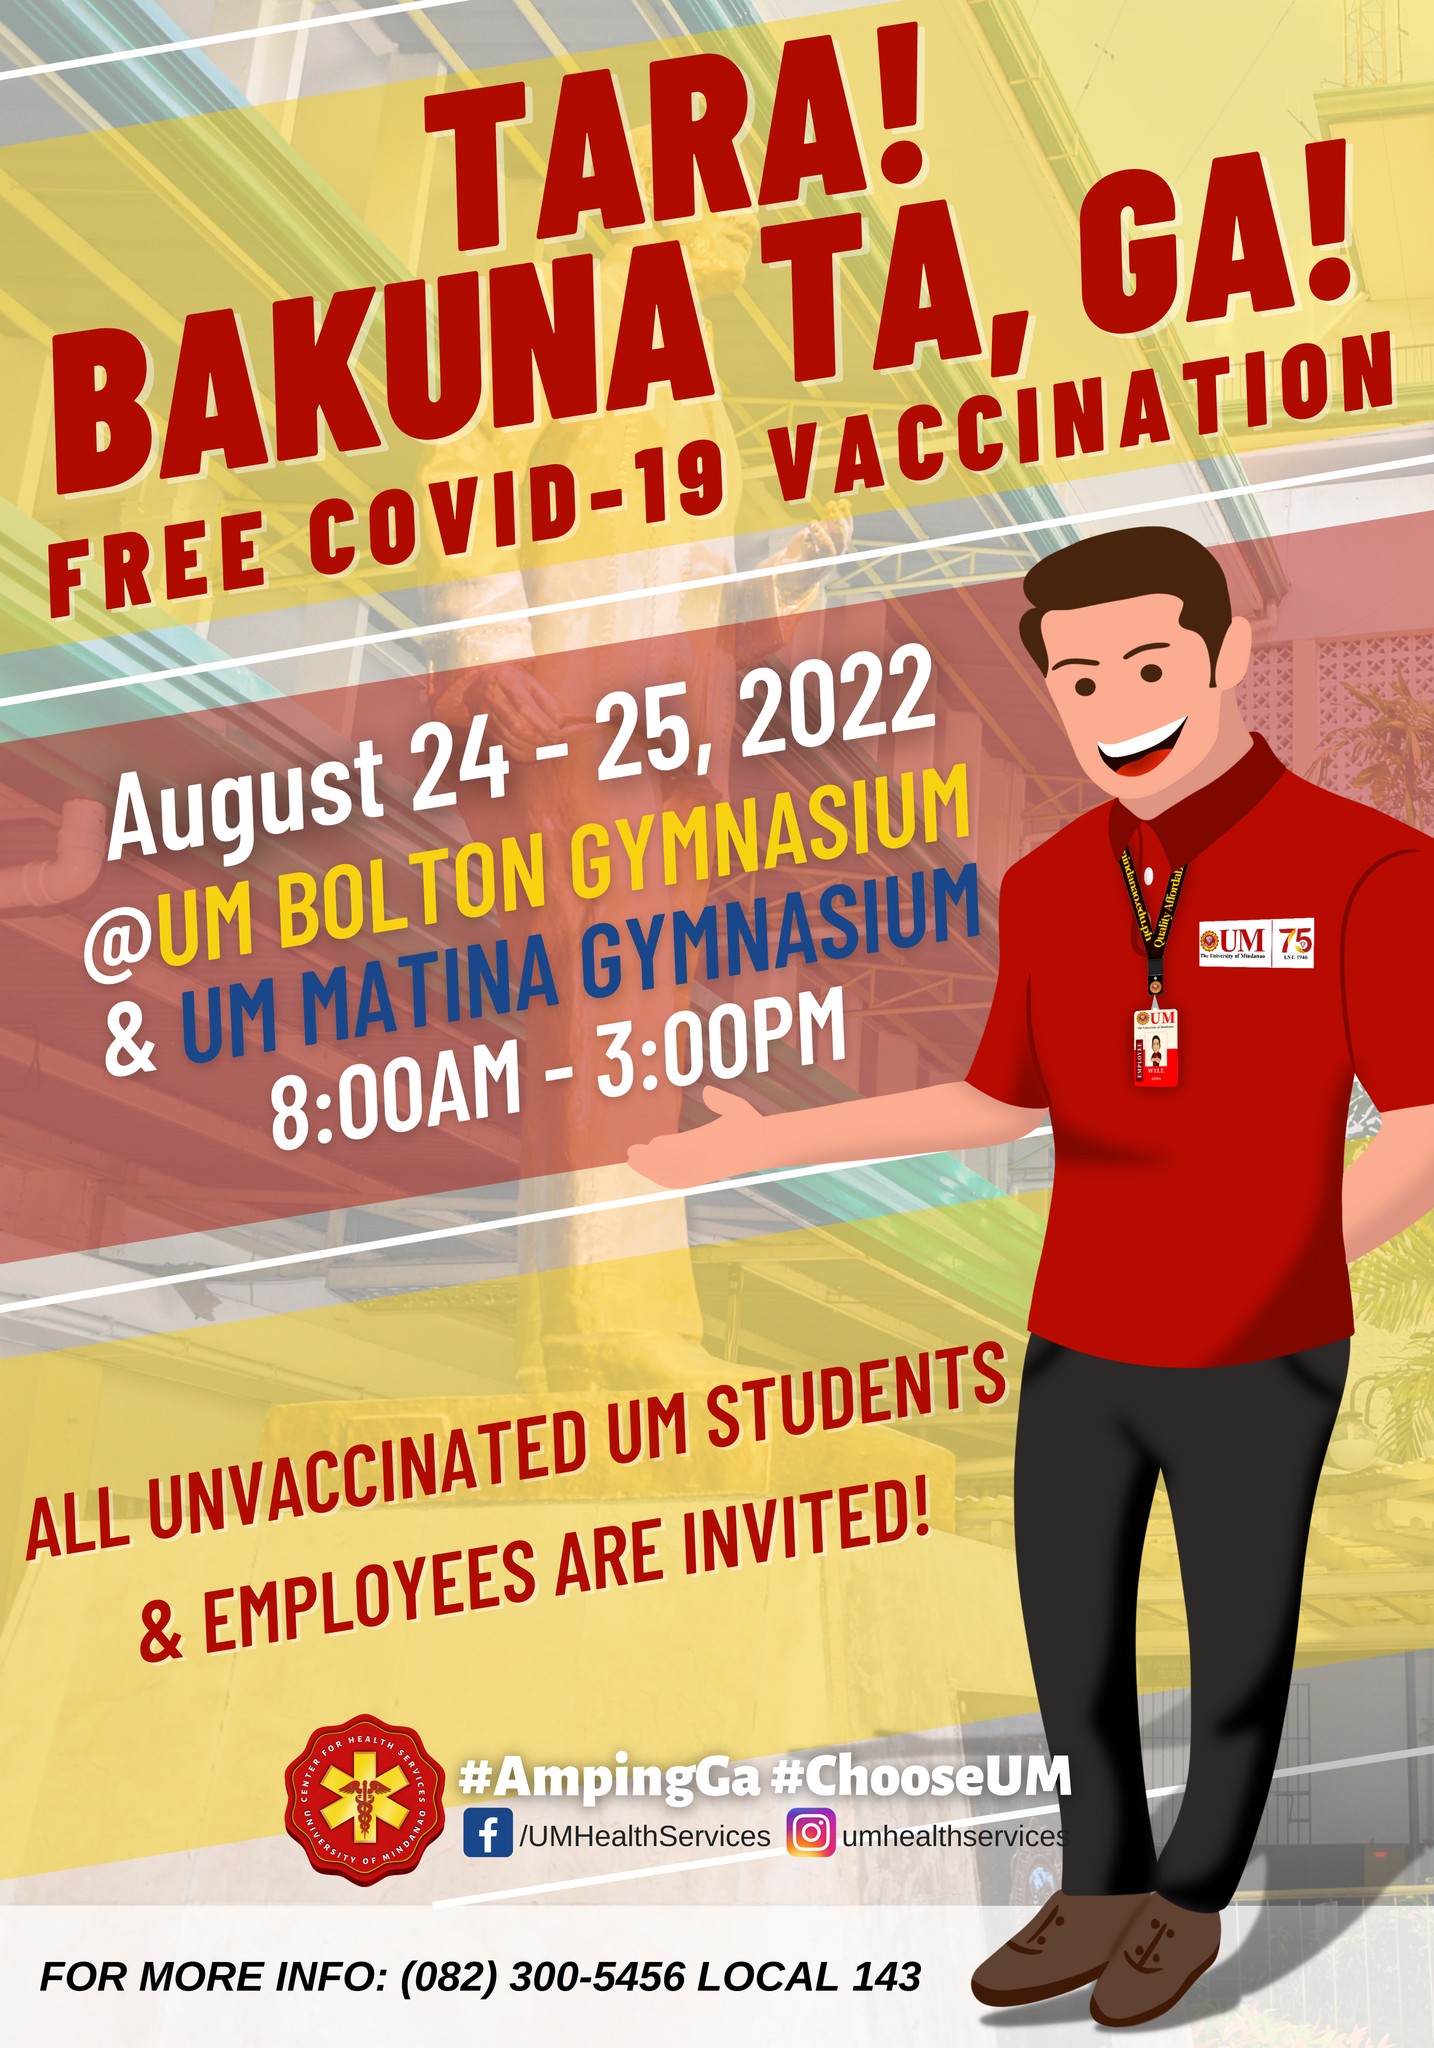 RESBAKUNA: Don't hesitate, let's vaccinate!